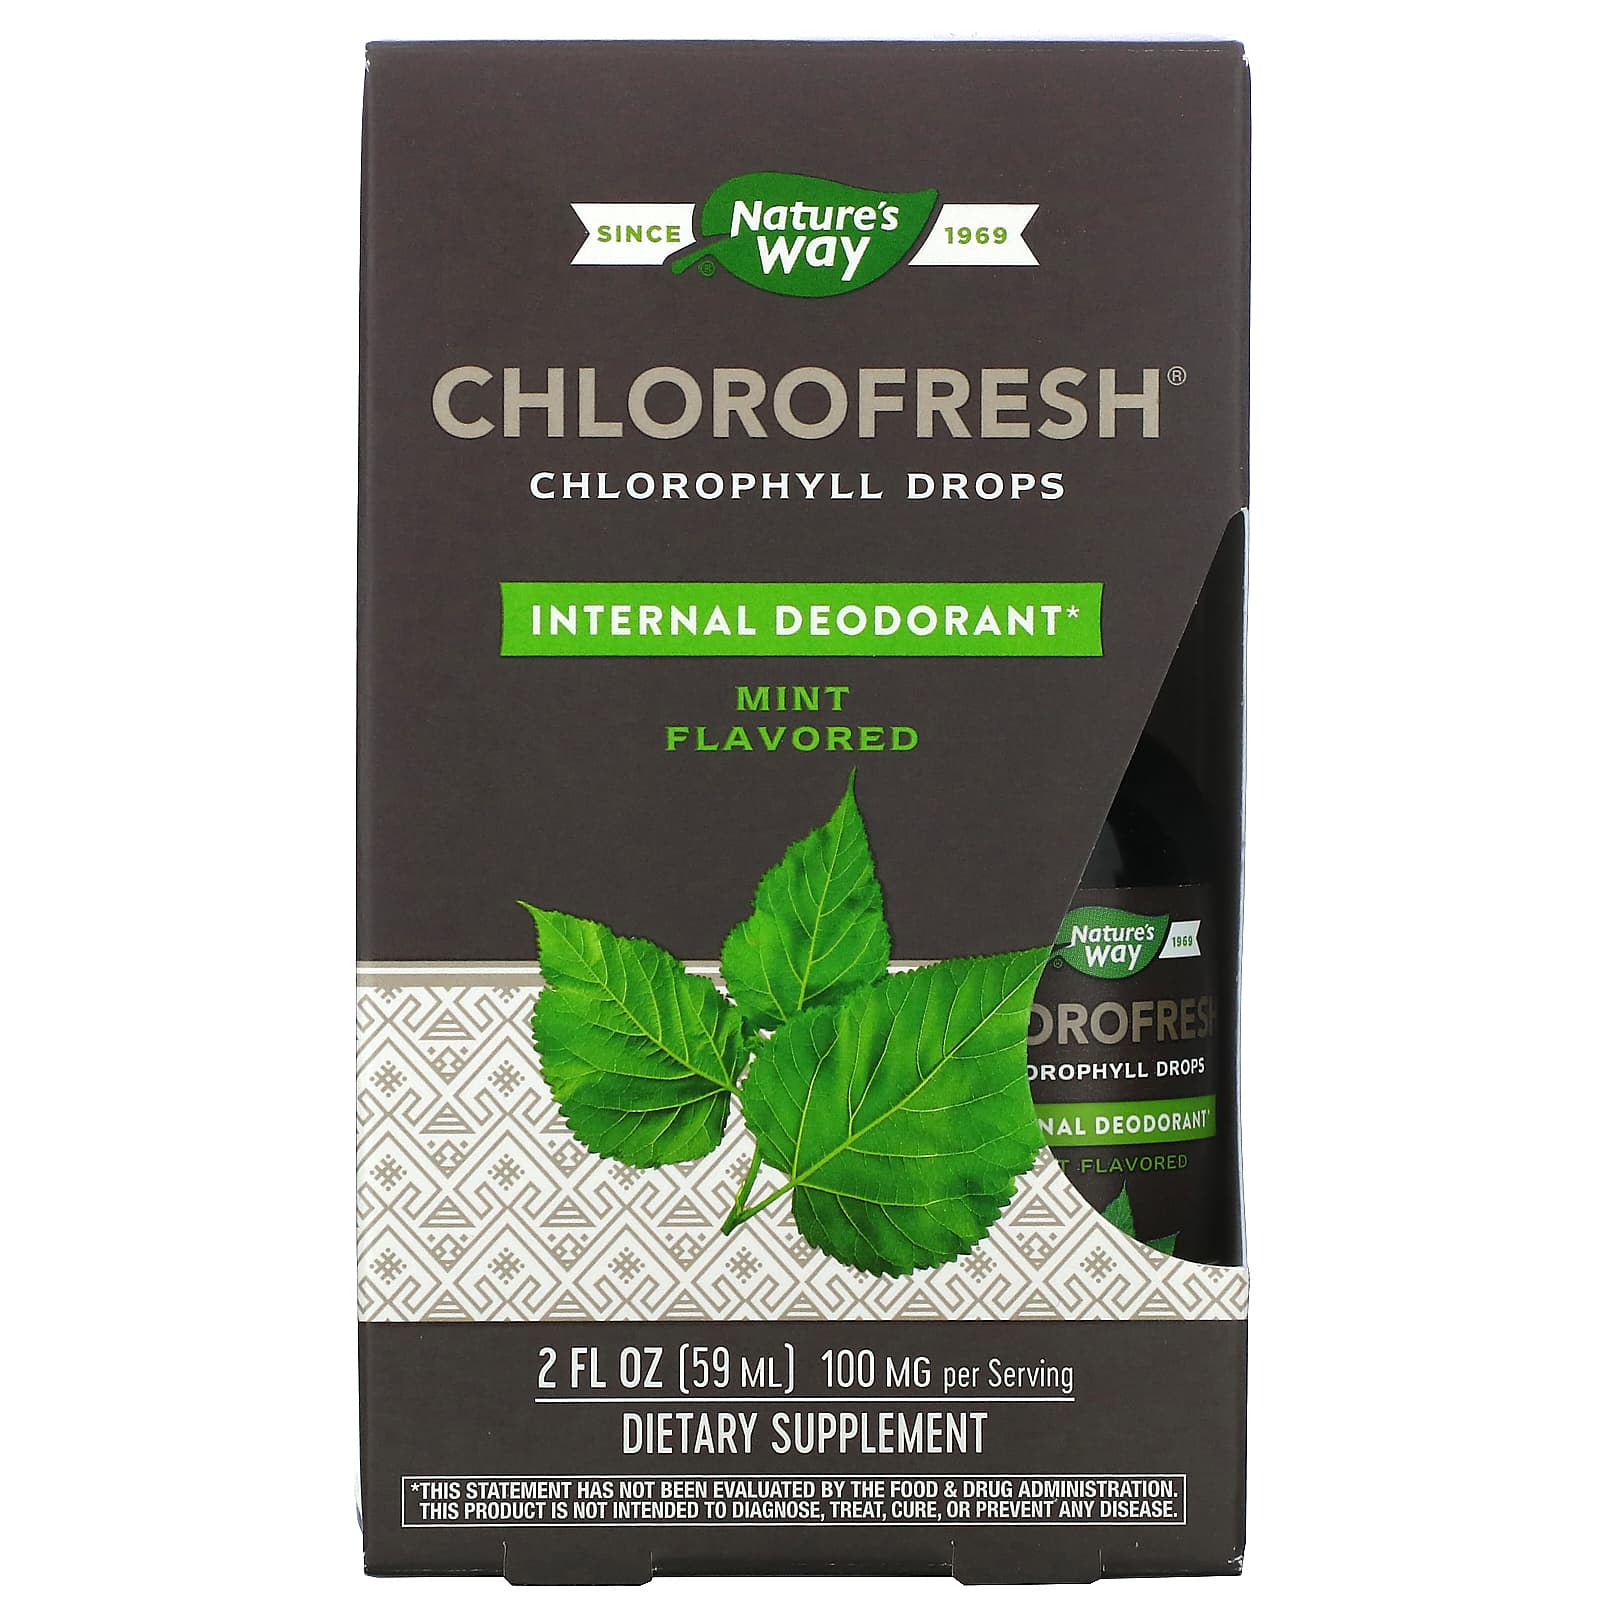 10 Best Liquid Chlorophyll Supplements Reviewed